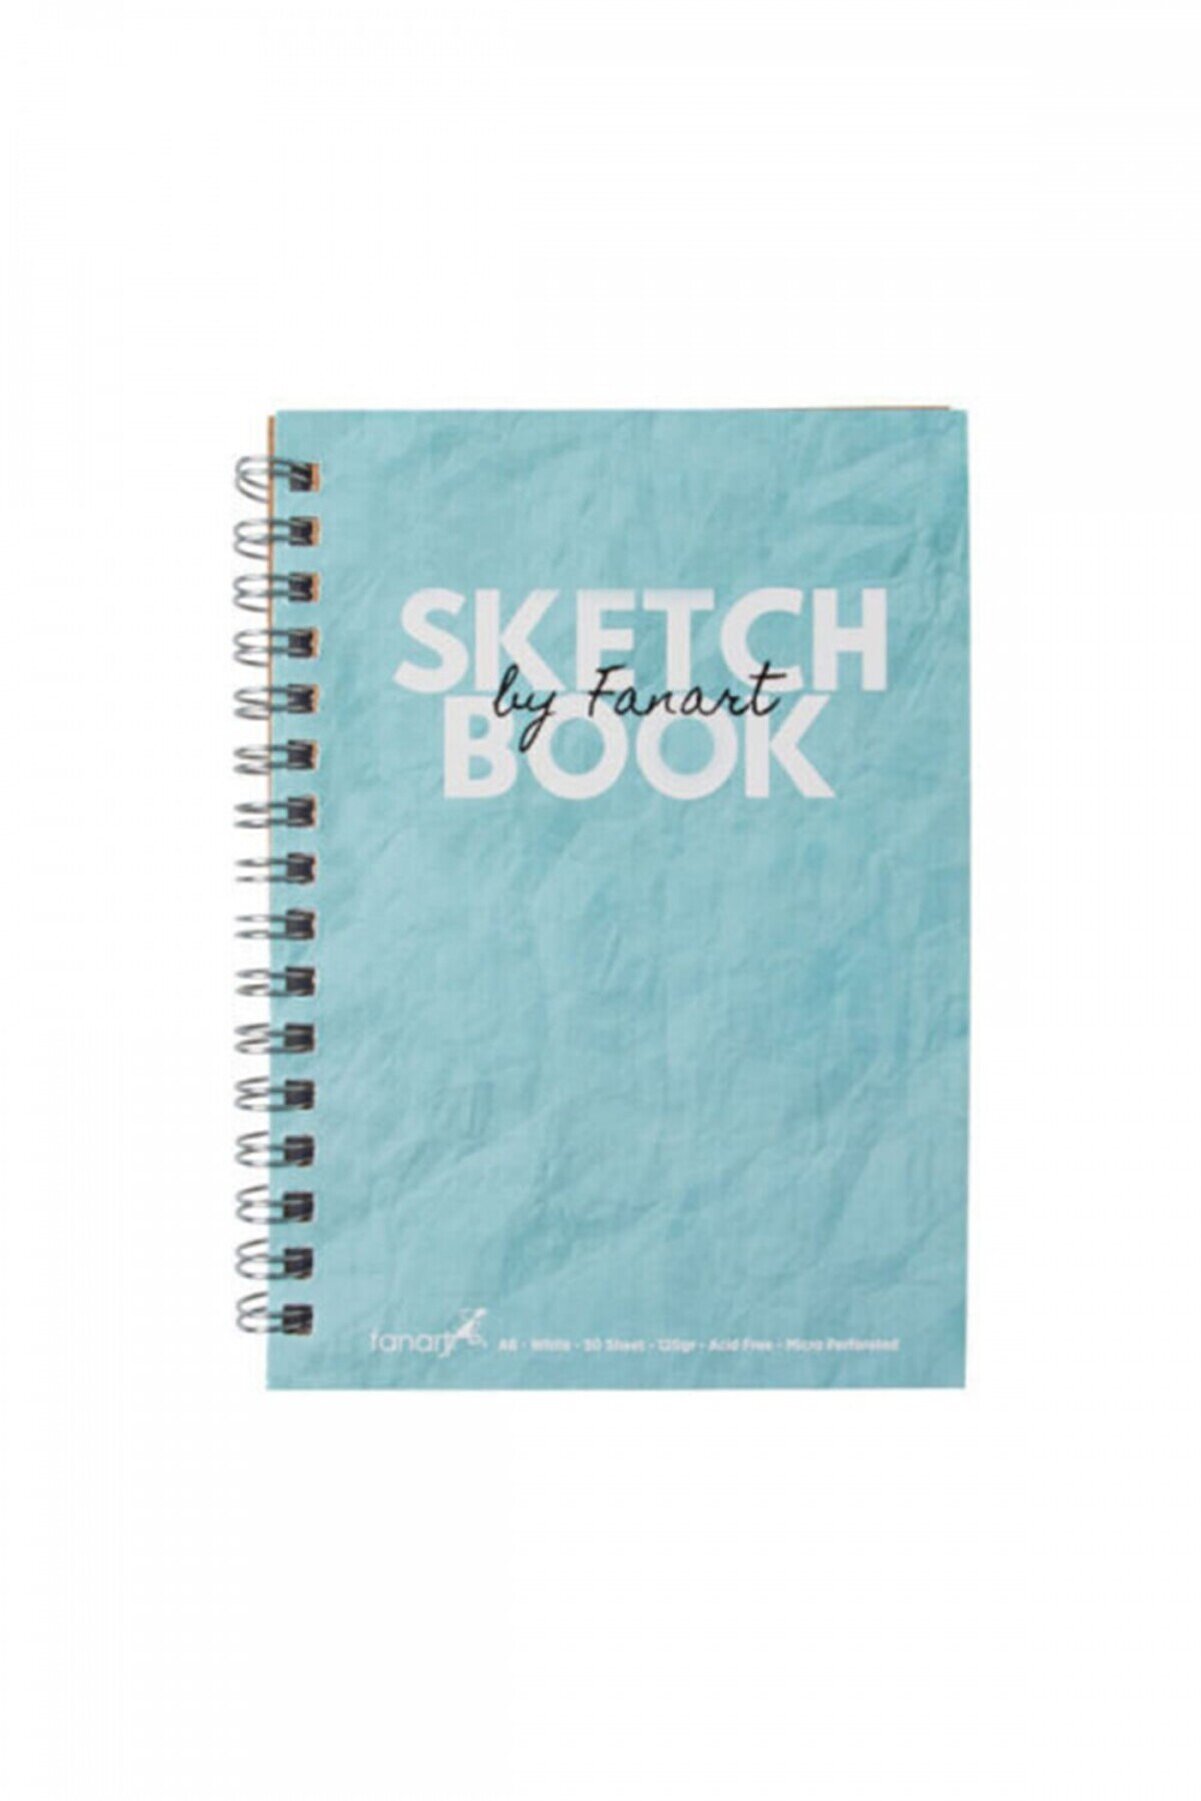 Fanart Sketch Book (ESKİZ DEFTERİ) A5 Spiralli 120 gr Beyaz Kağıt- Turkuaz